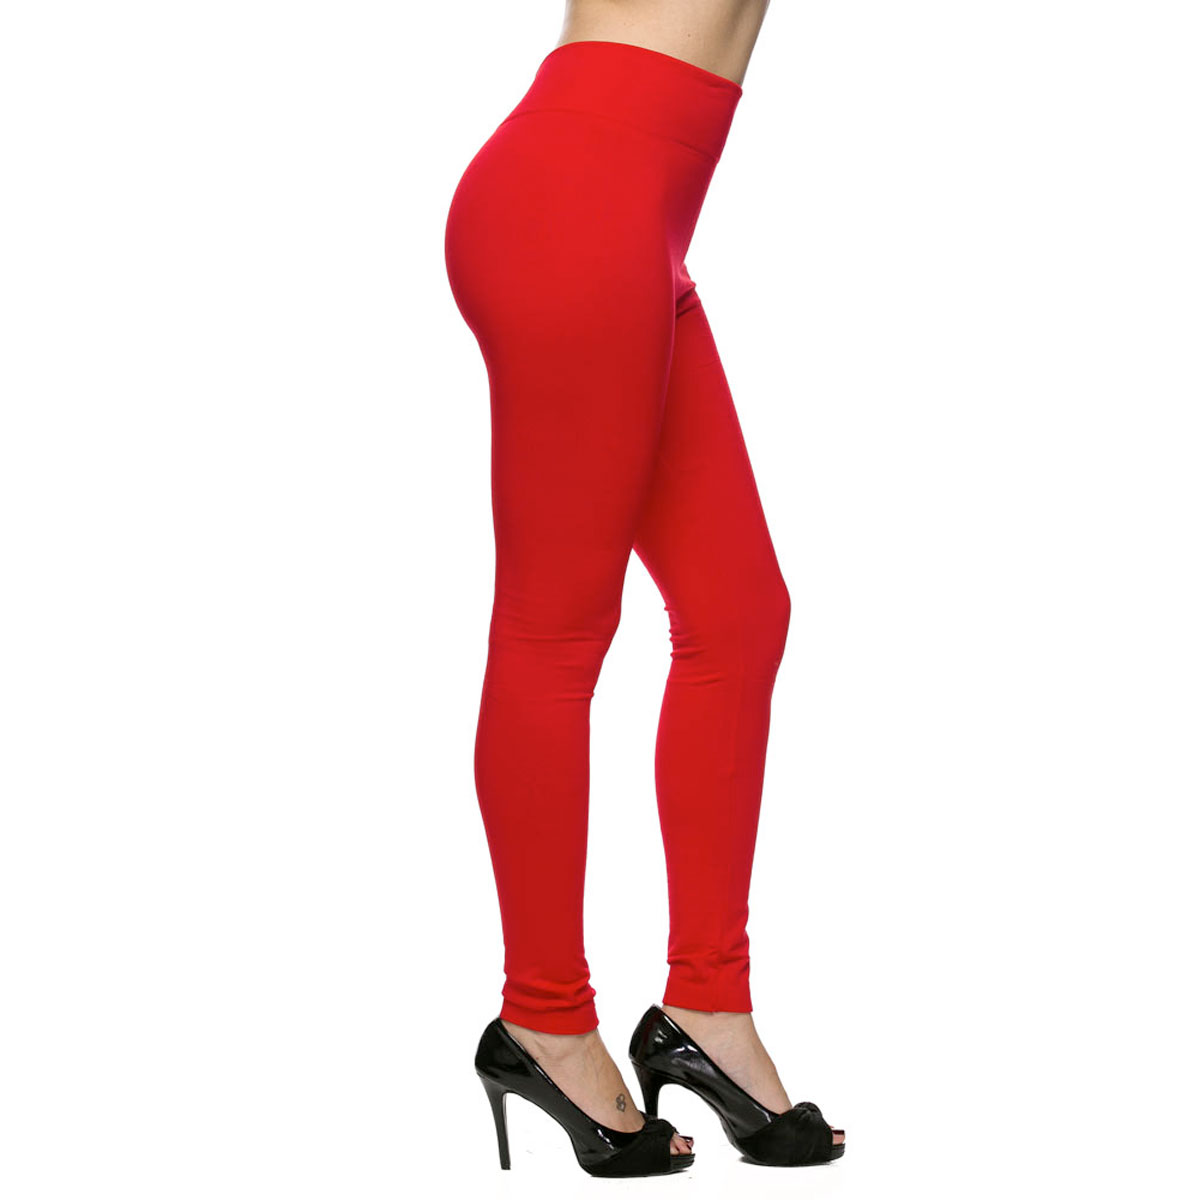 Solid Red - Fleece Lined Leggings 900